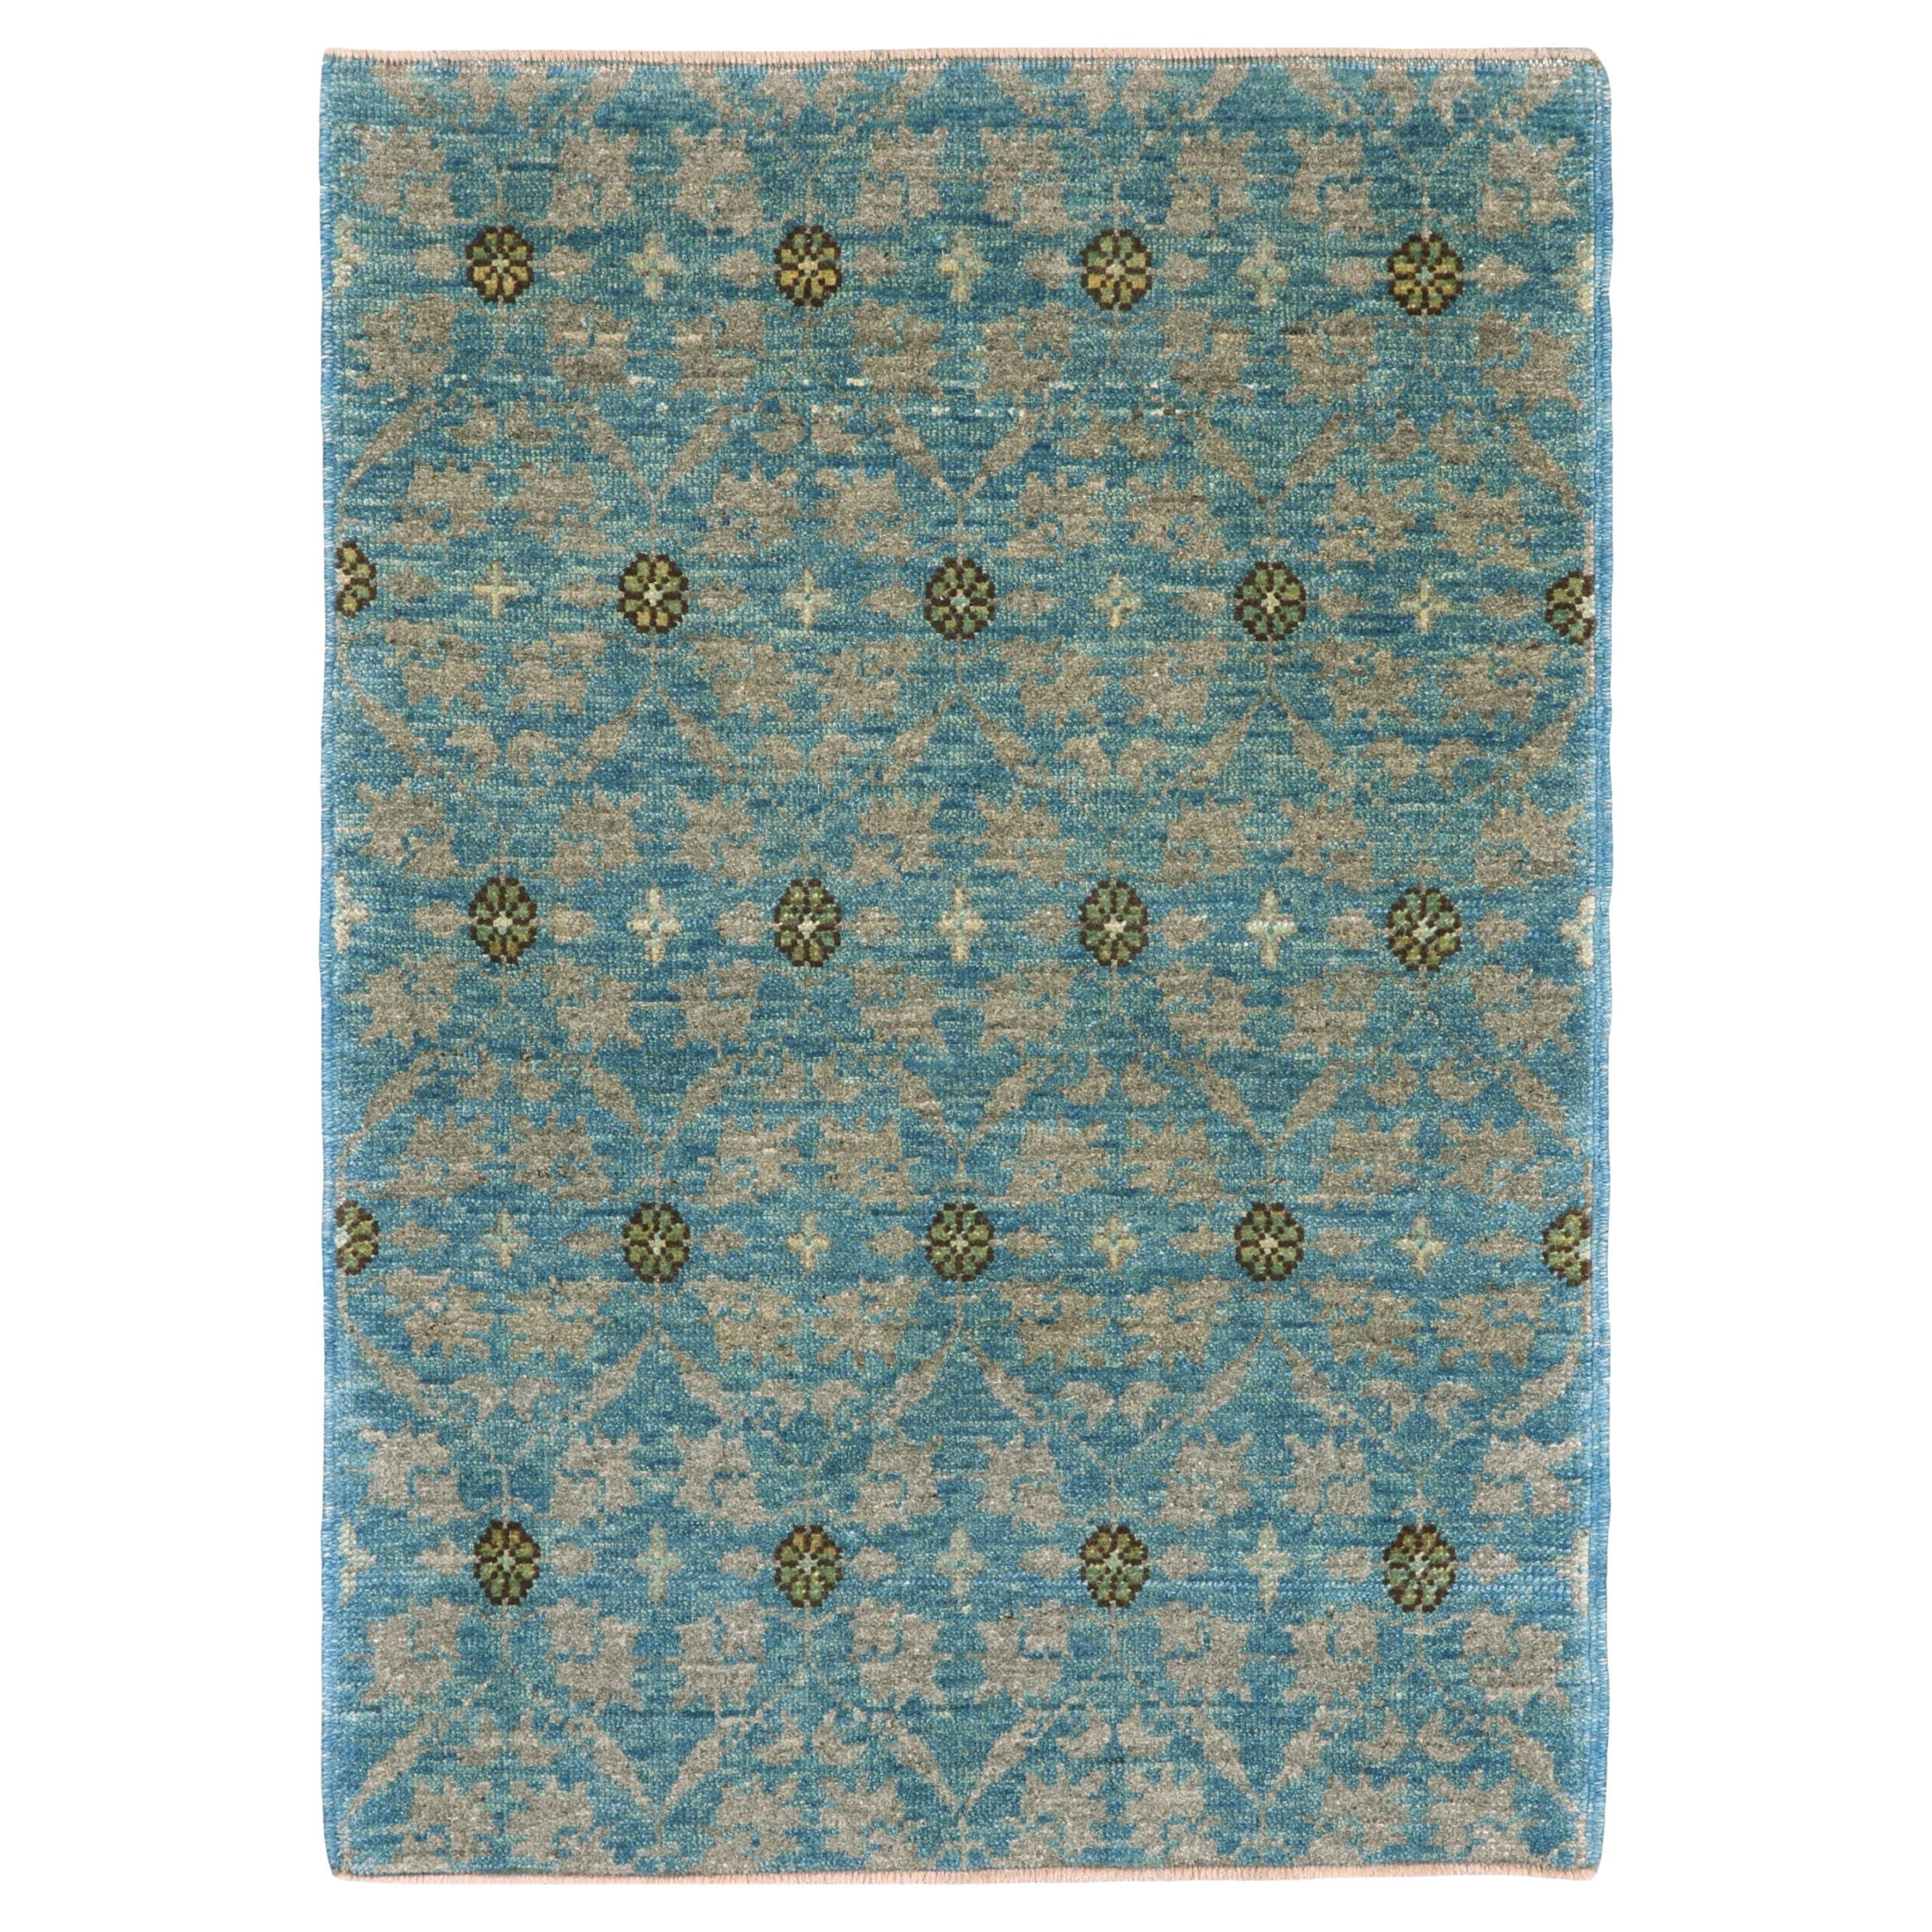 Ararat Rugs Mamluk Wagireh Rug with Flower Lattice Design Natural Dyed Carpet For Sale